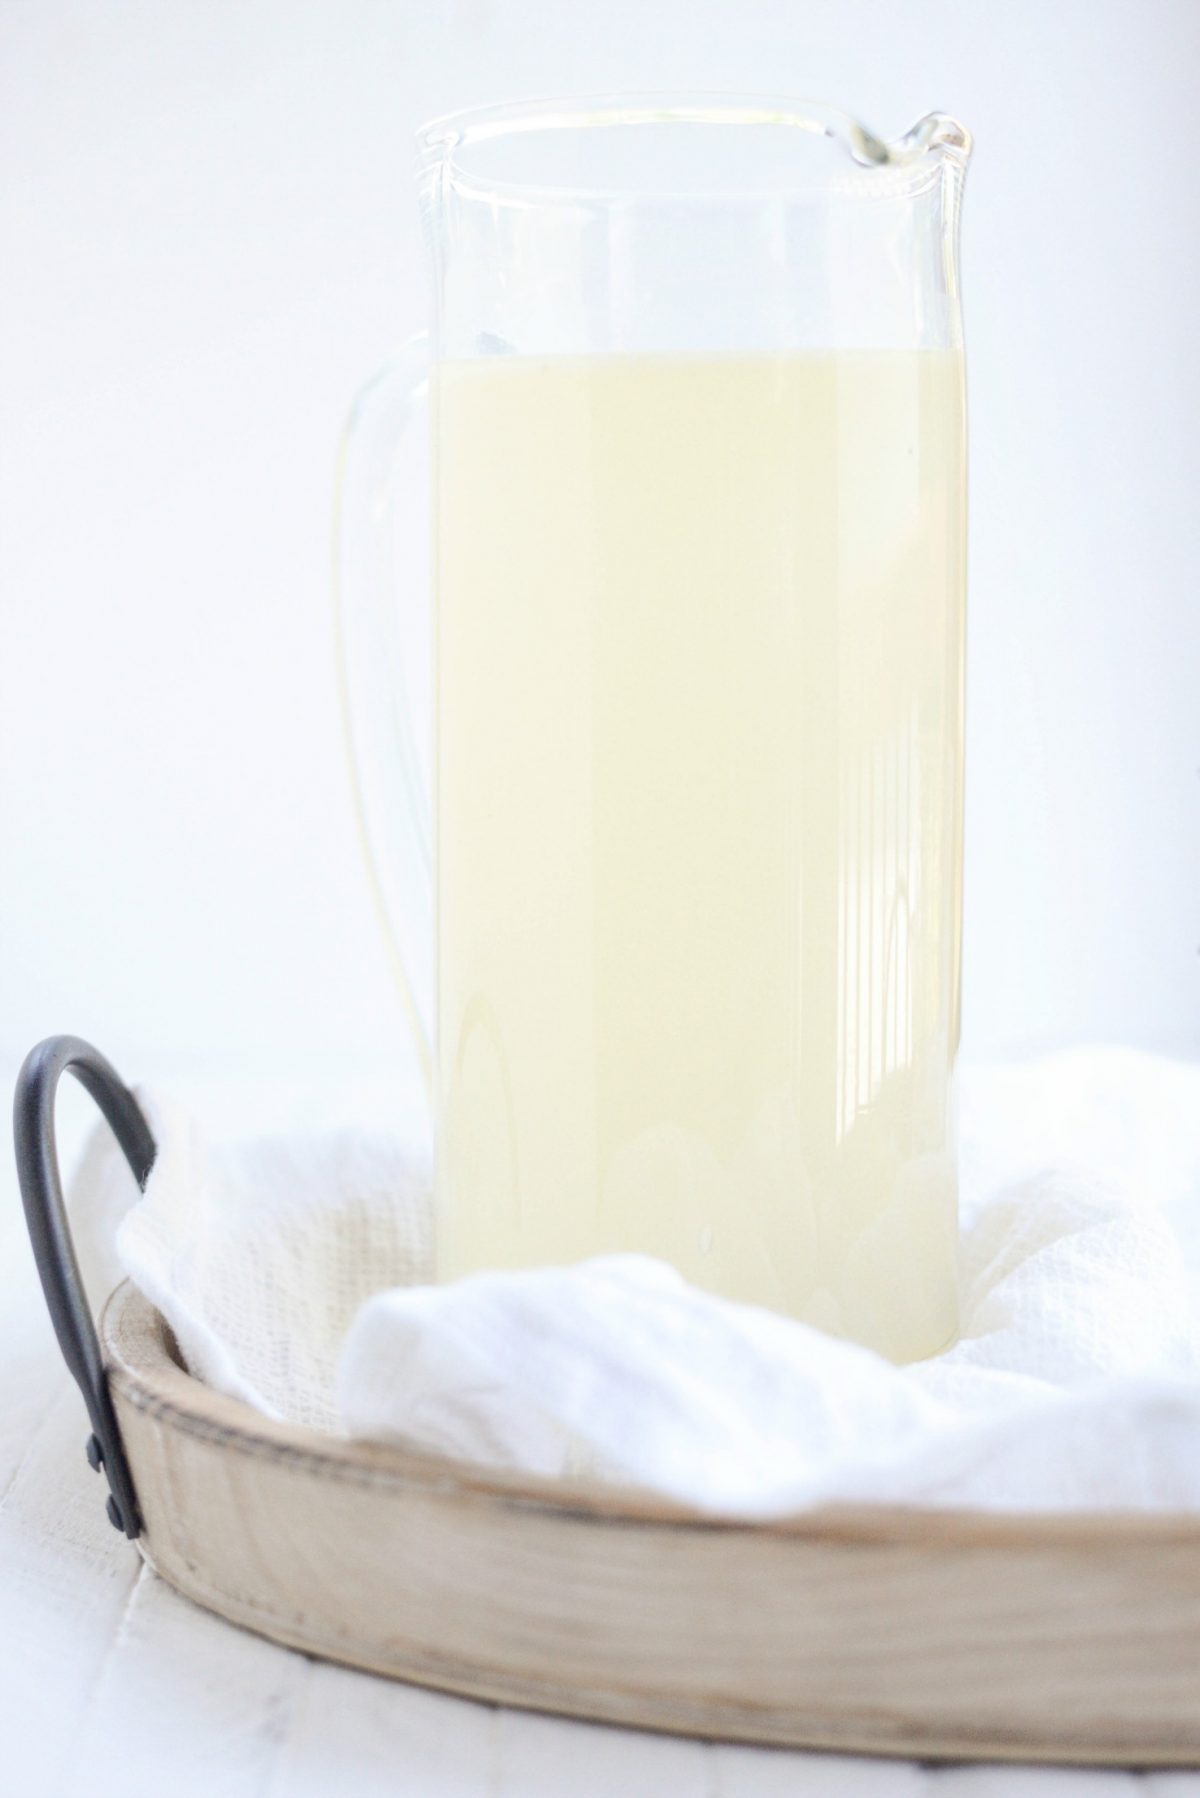 Honey Lavender Lemonade in a pitcher